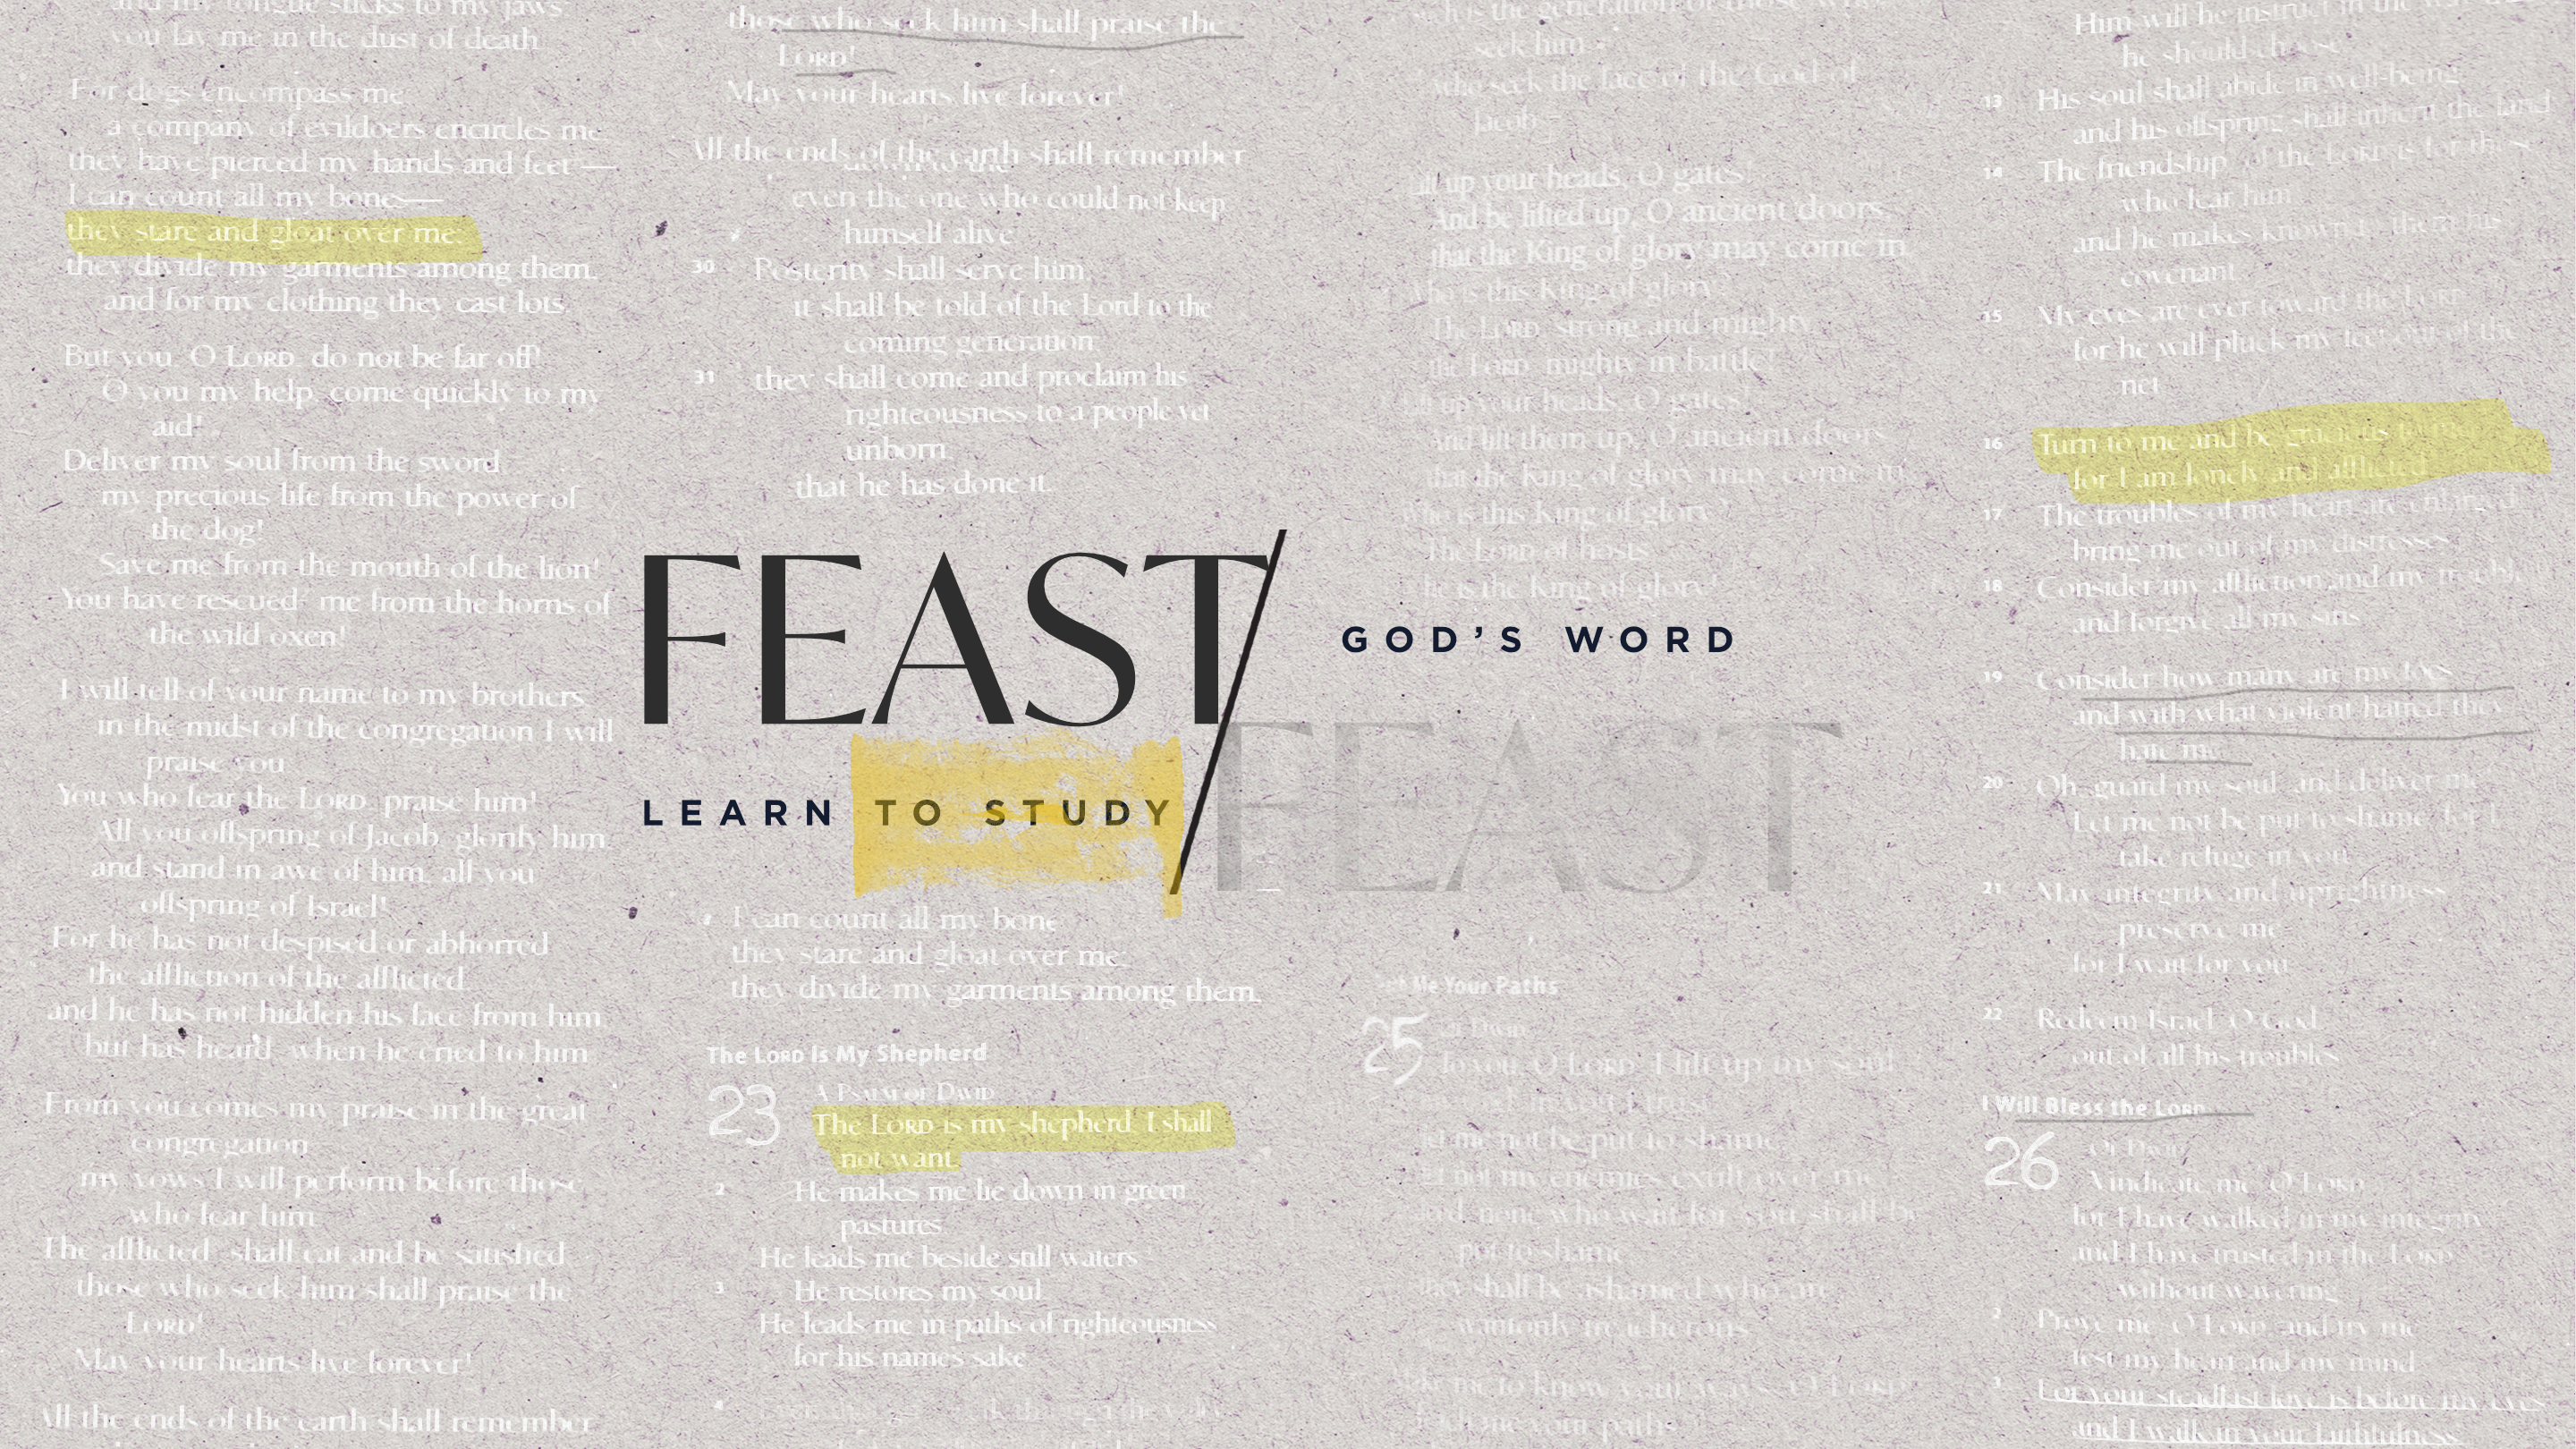 Feast (16x9) image